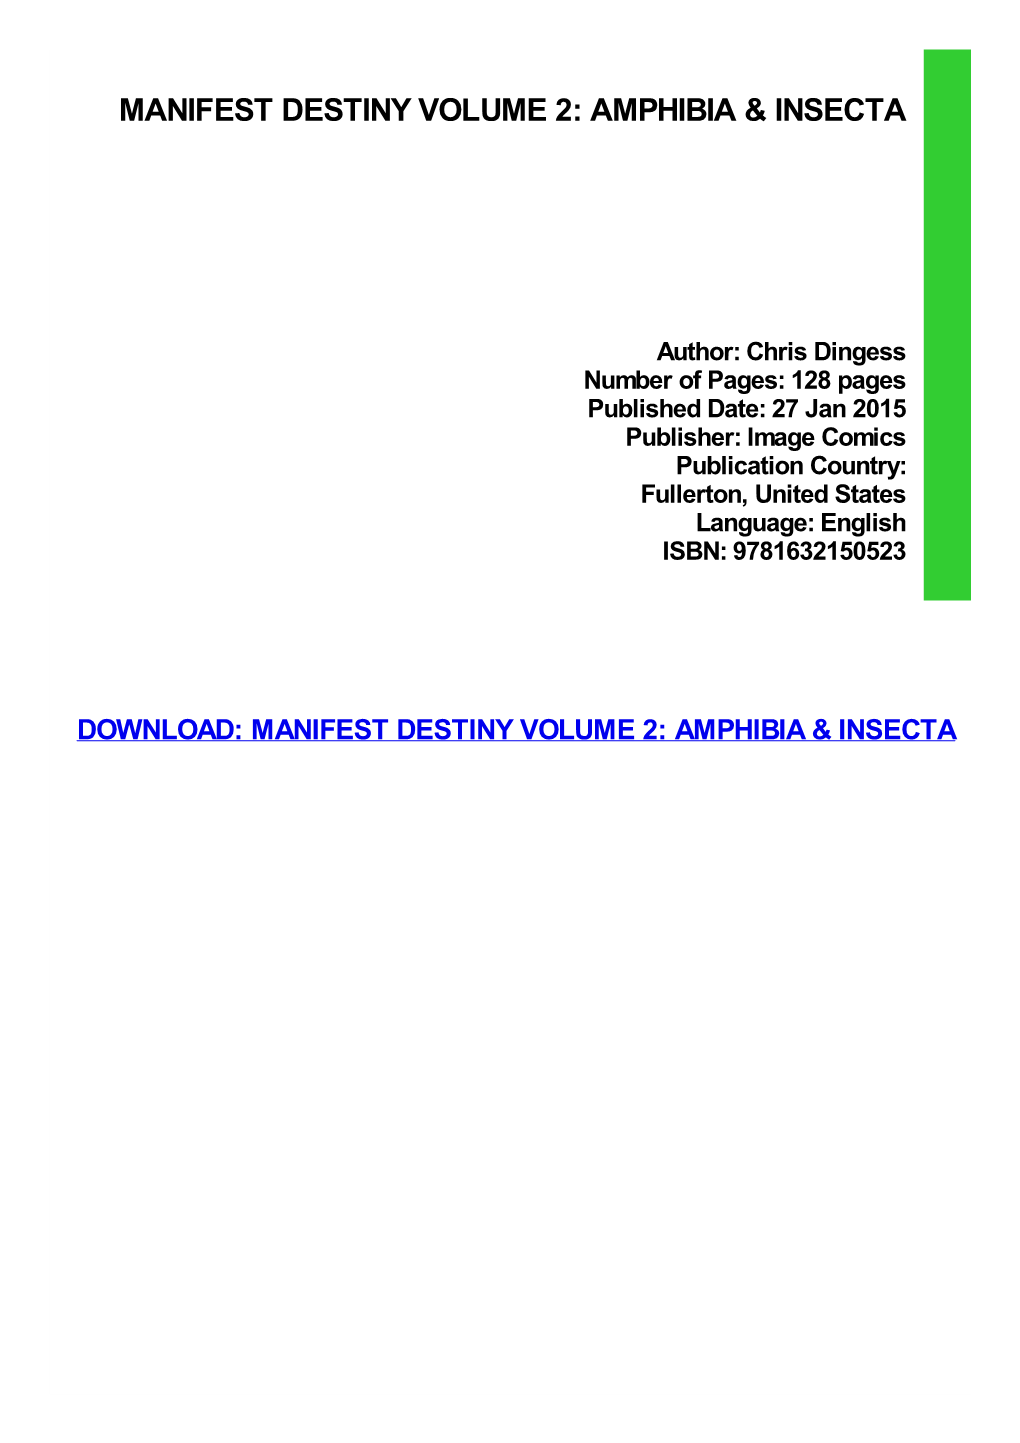 Manifest Destiny Volume 2: Amphibia & Insecta Download Free